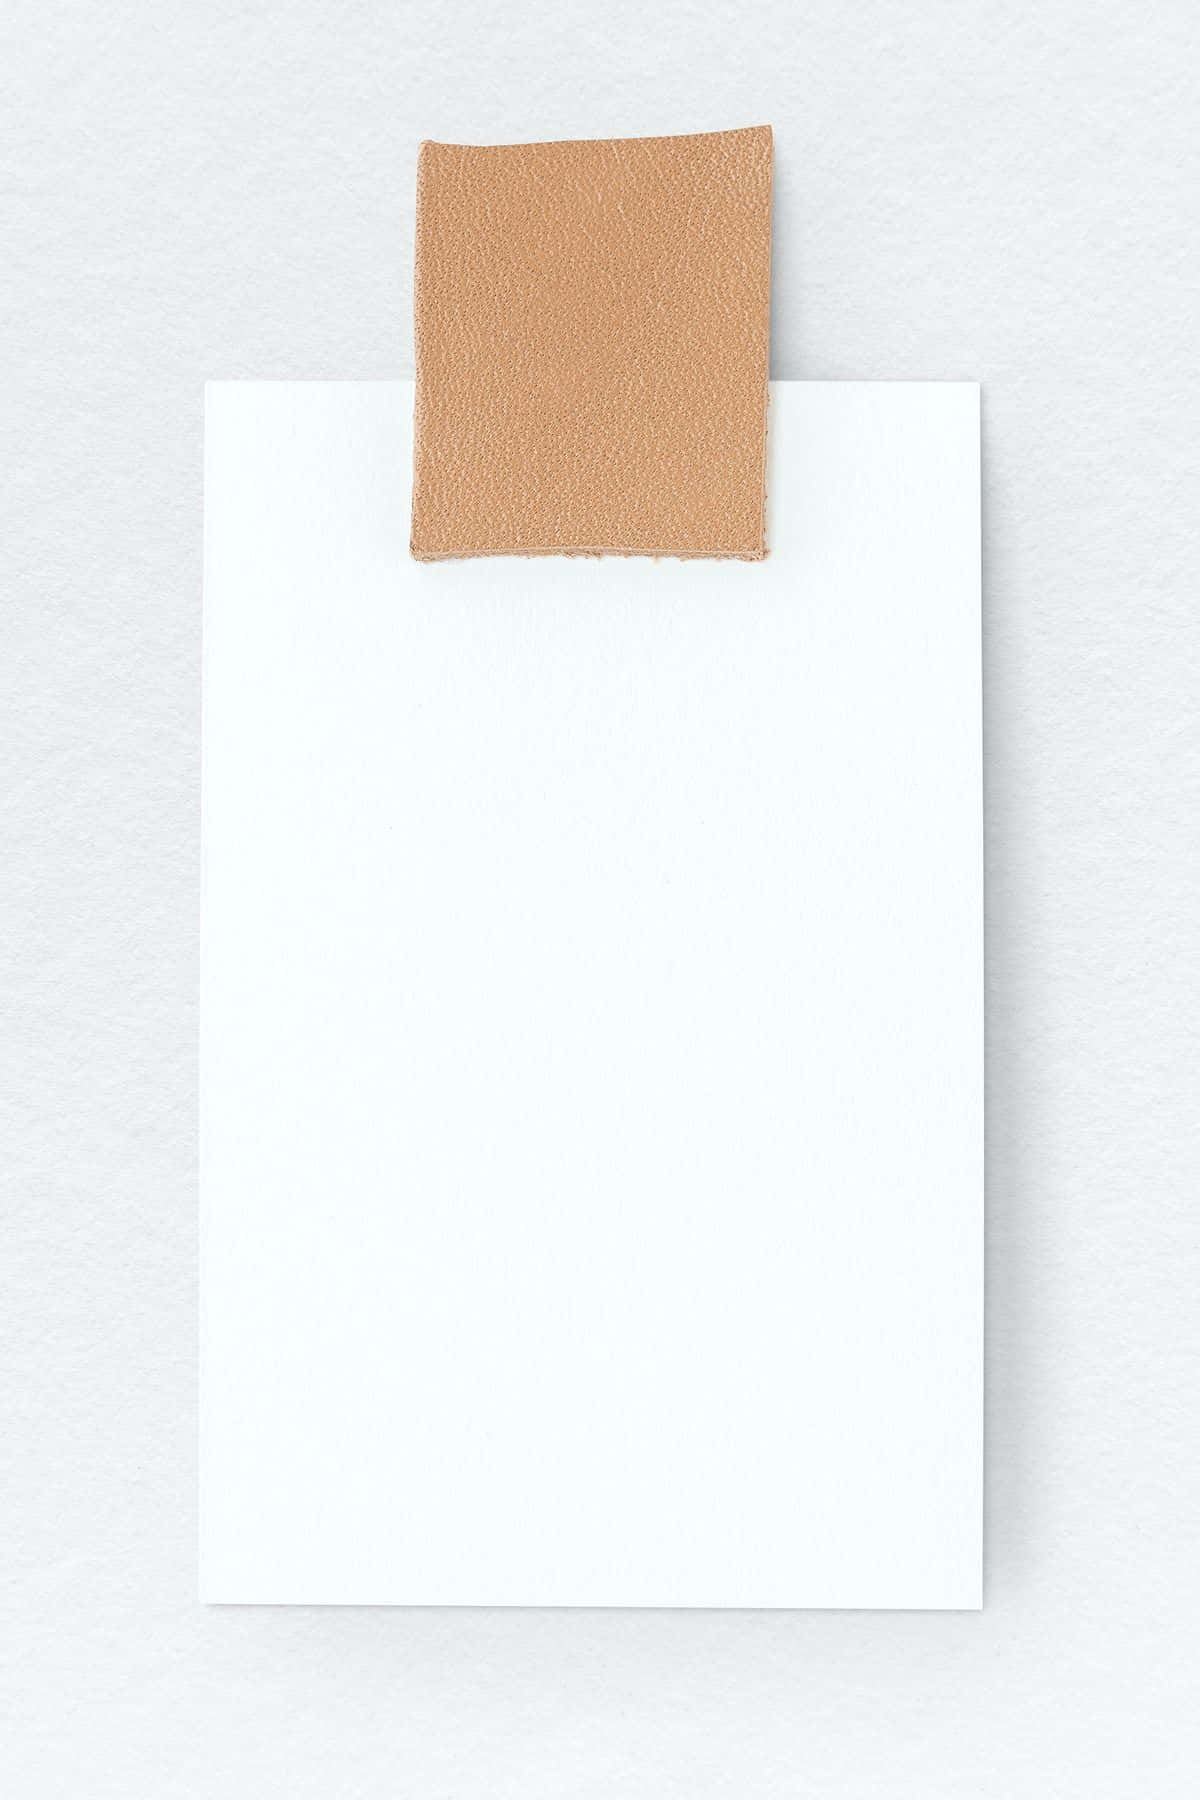 Papir med brunt tape Wallpaper